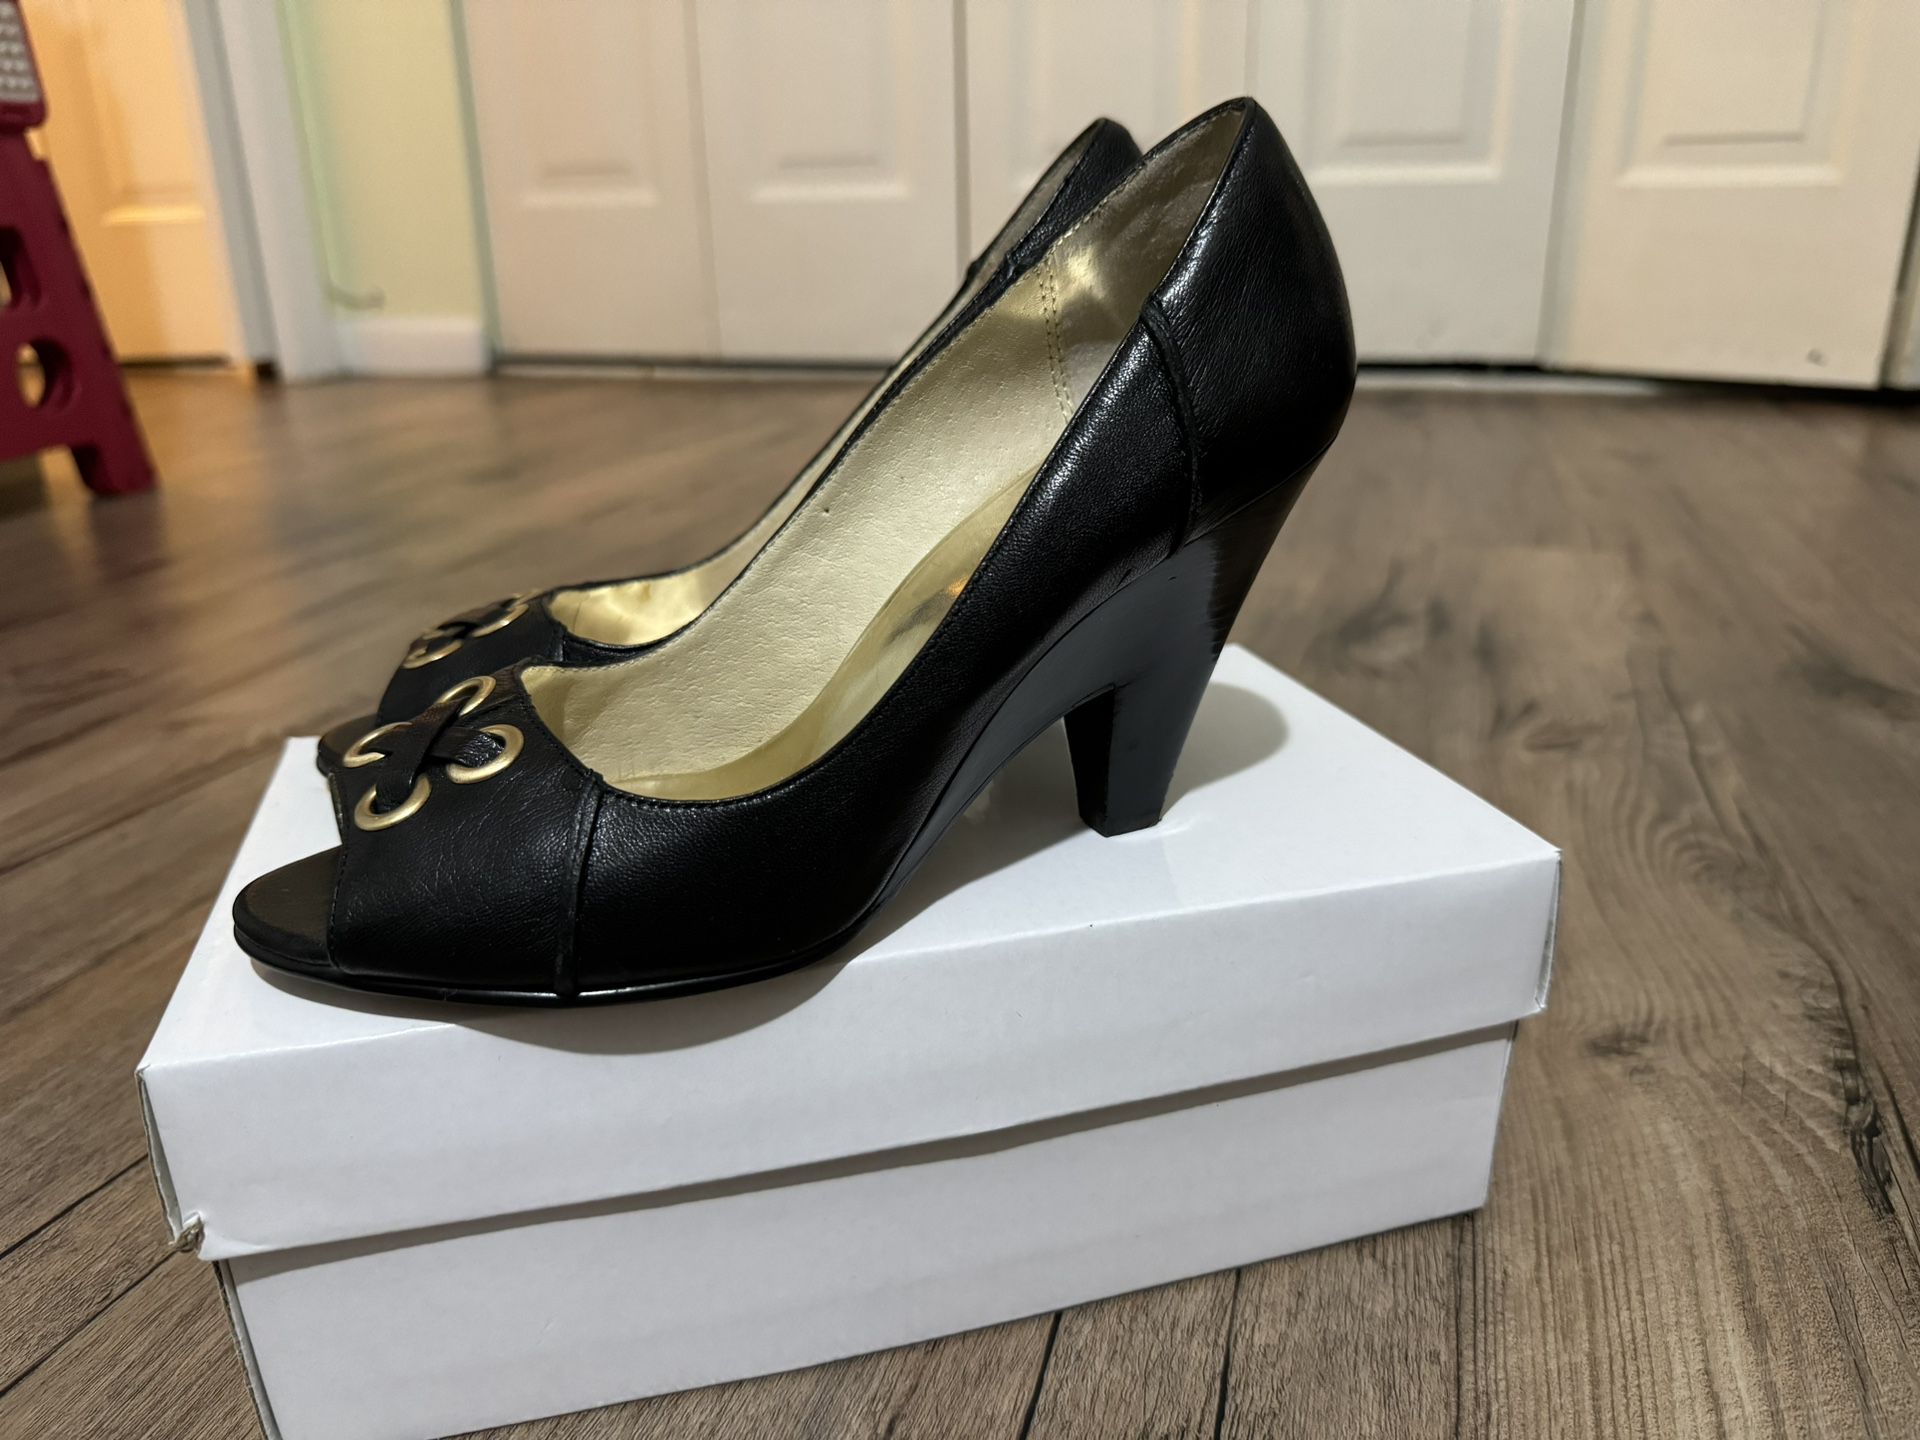 Michael Kors Shoes Heels Size 8.5